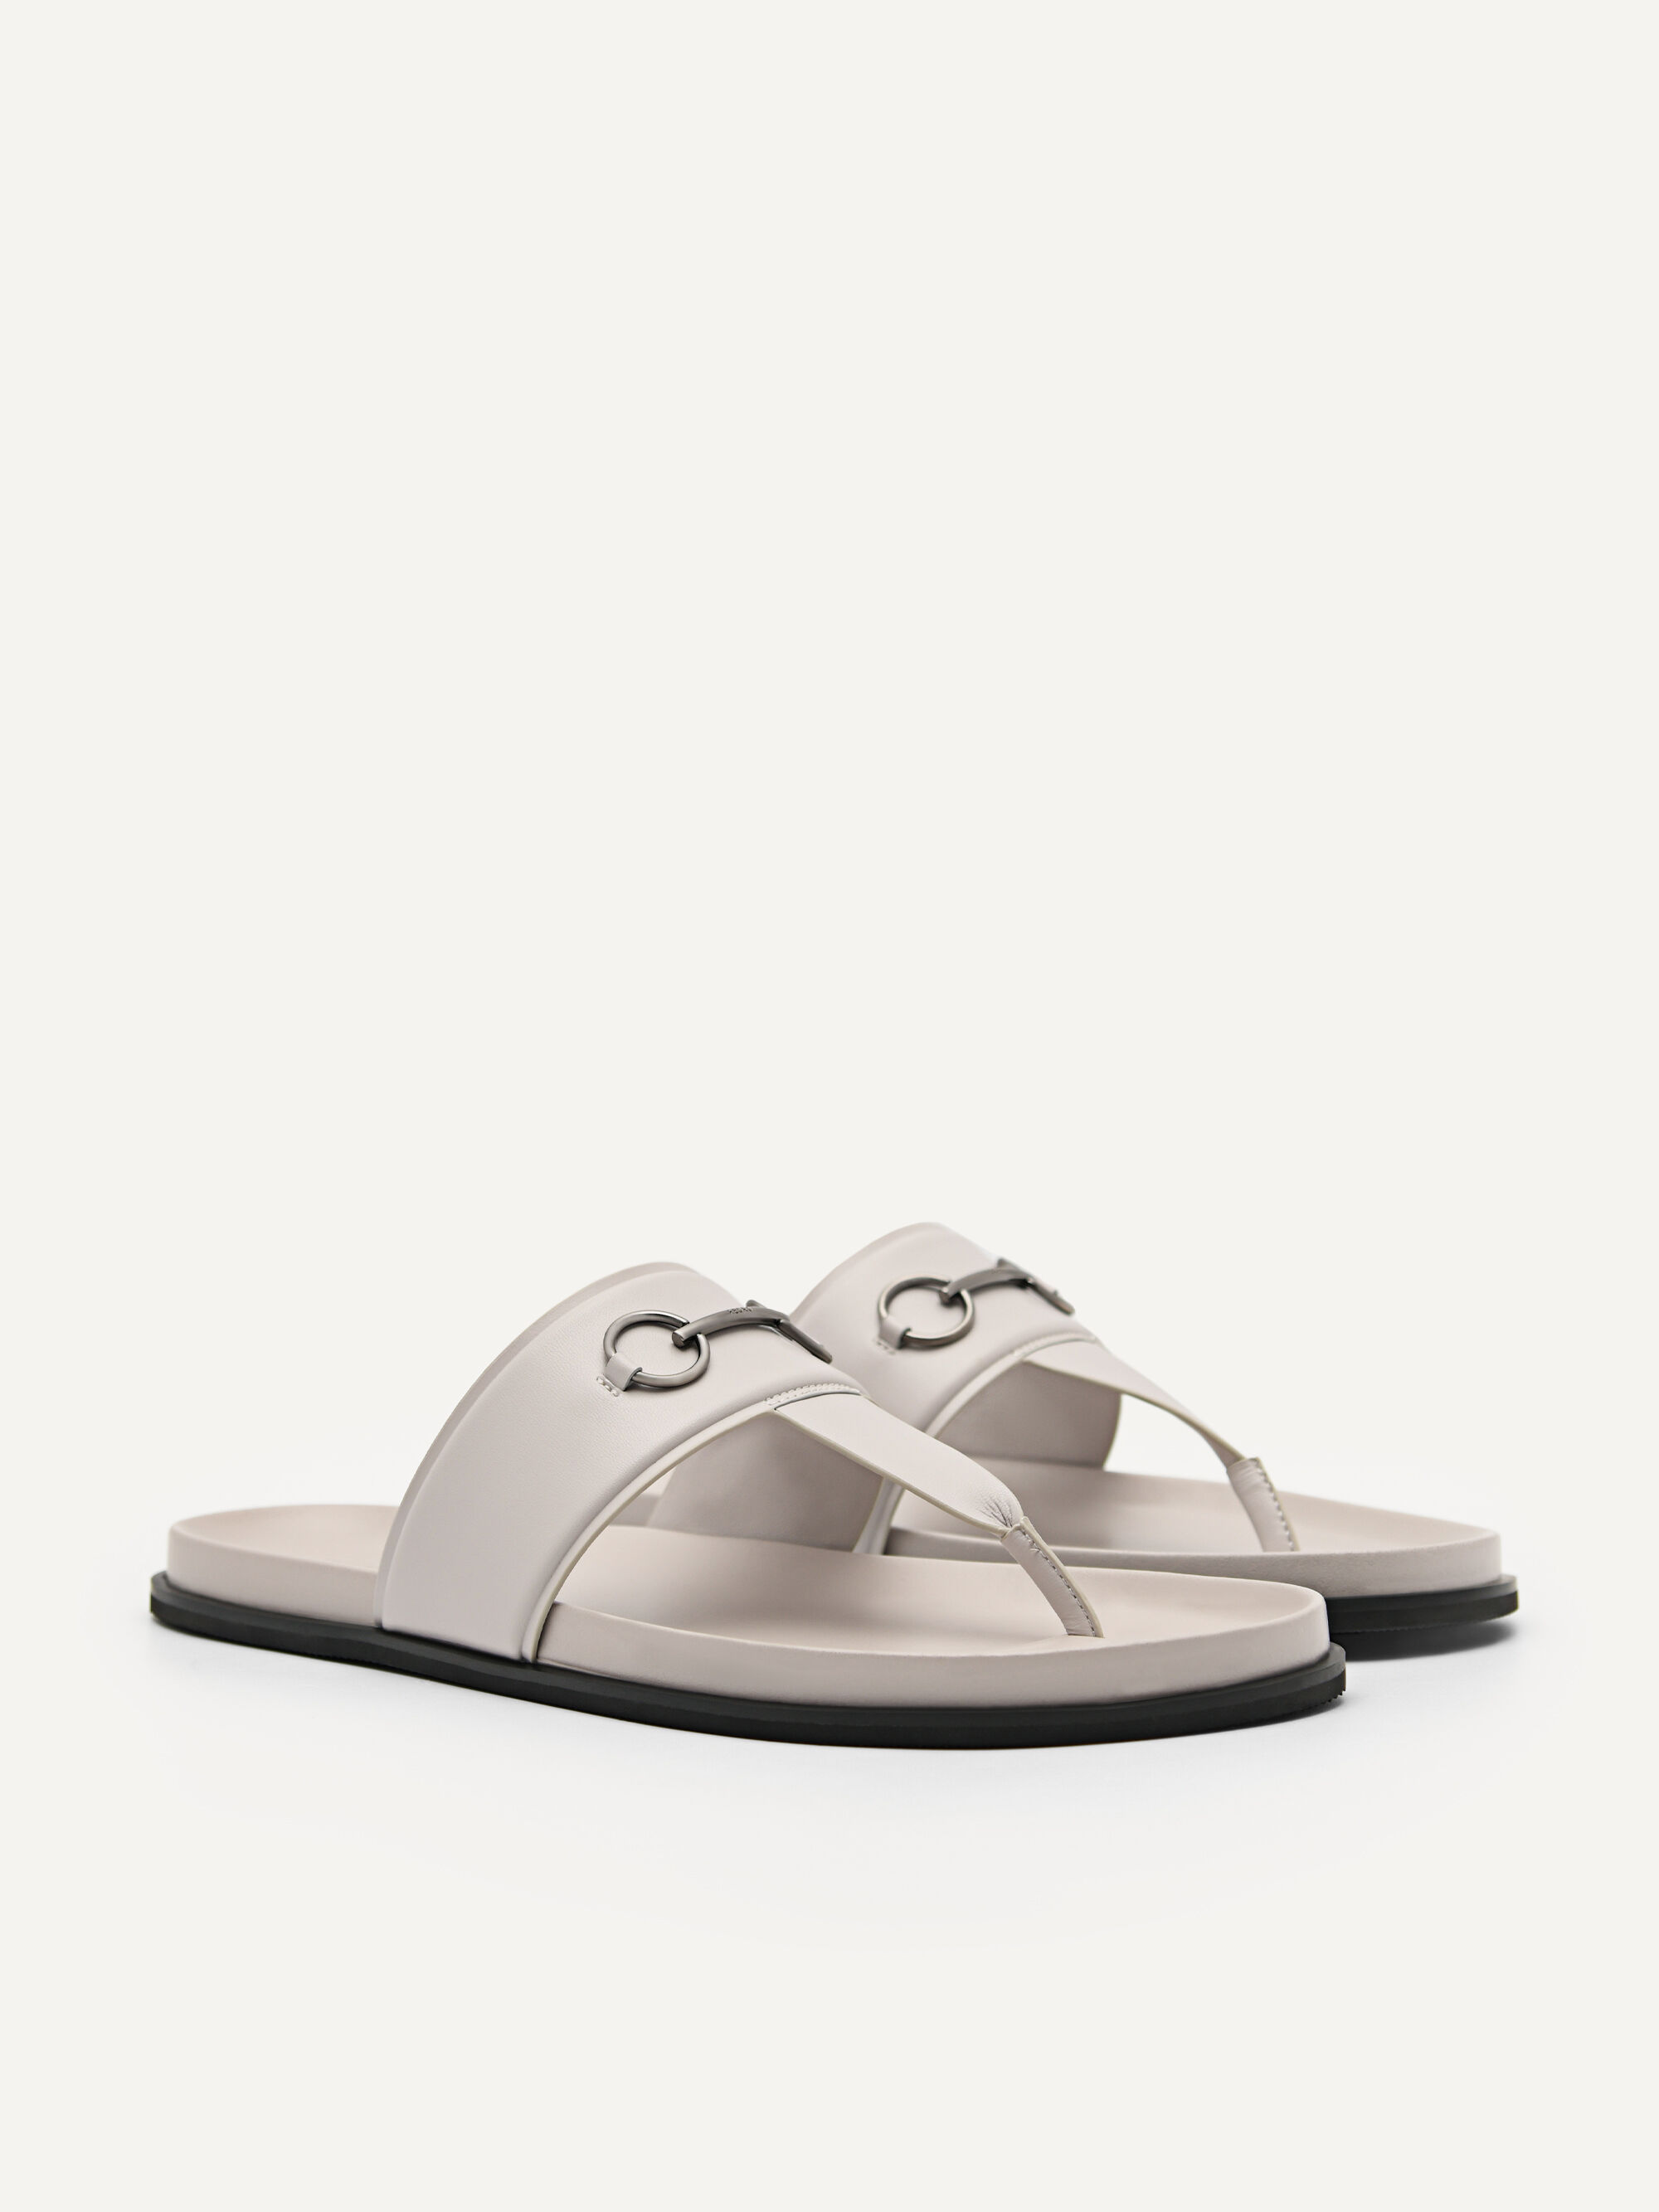 Bel-Air Sandals, Light Grey